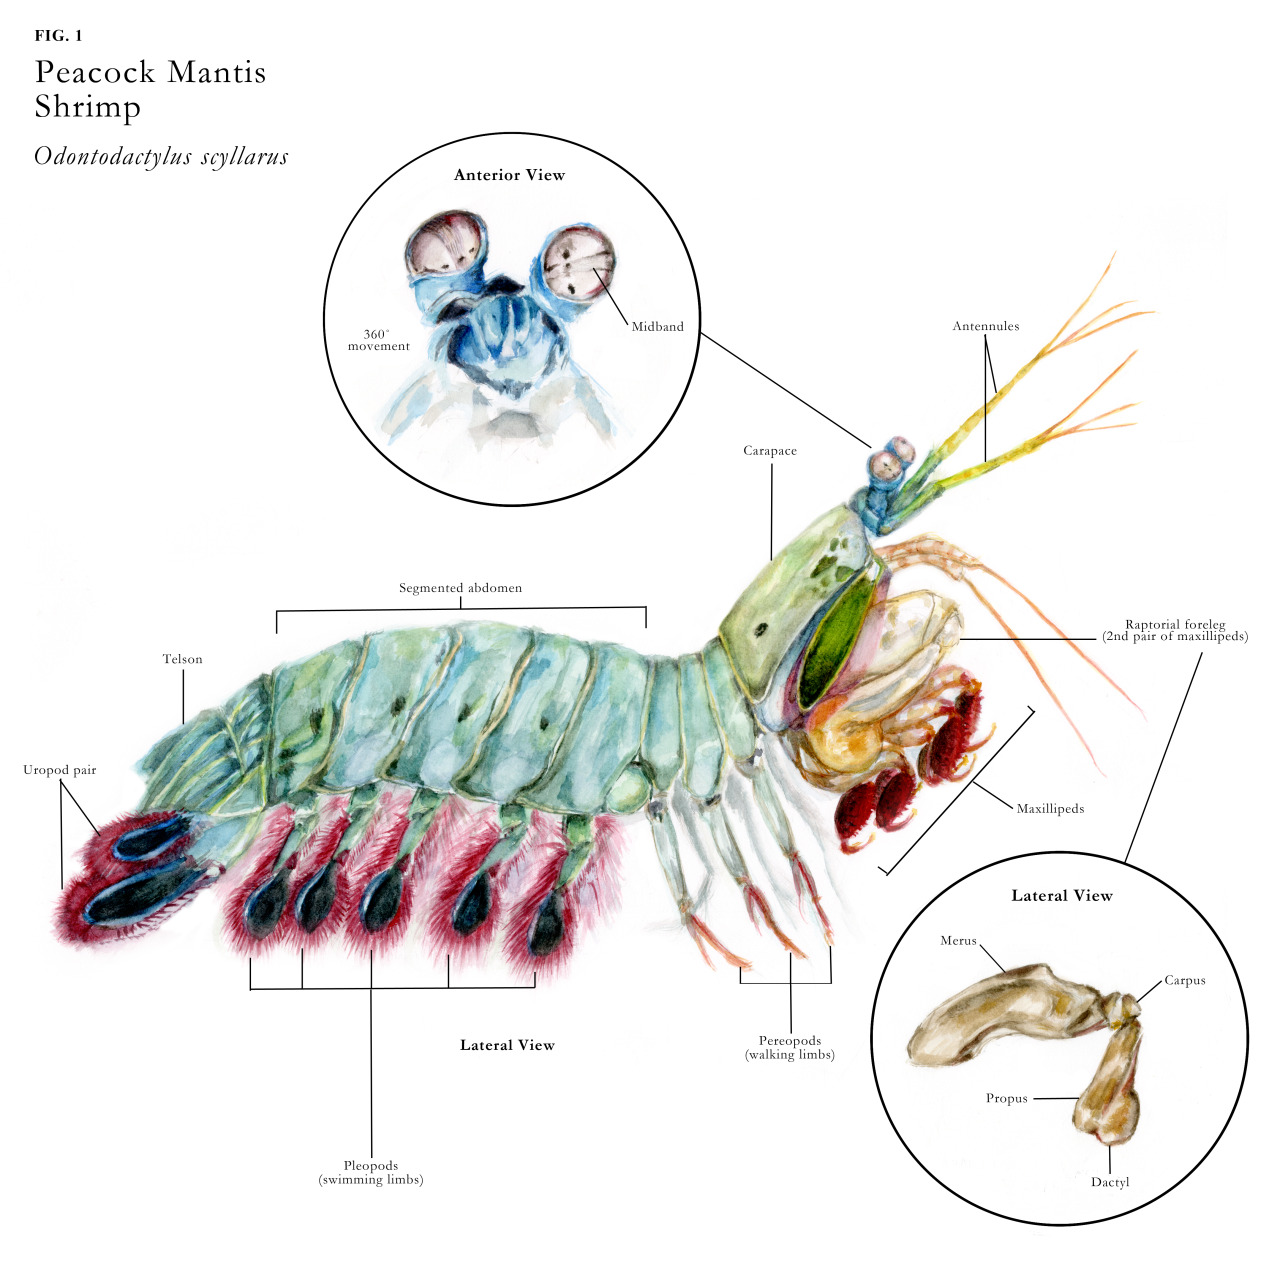 Scientific Illustration | justskyesart: Peacock Mantis Shrimp...